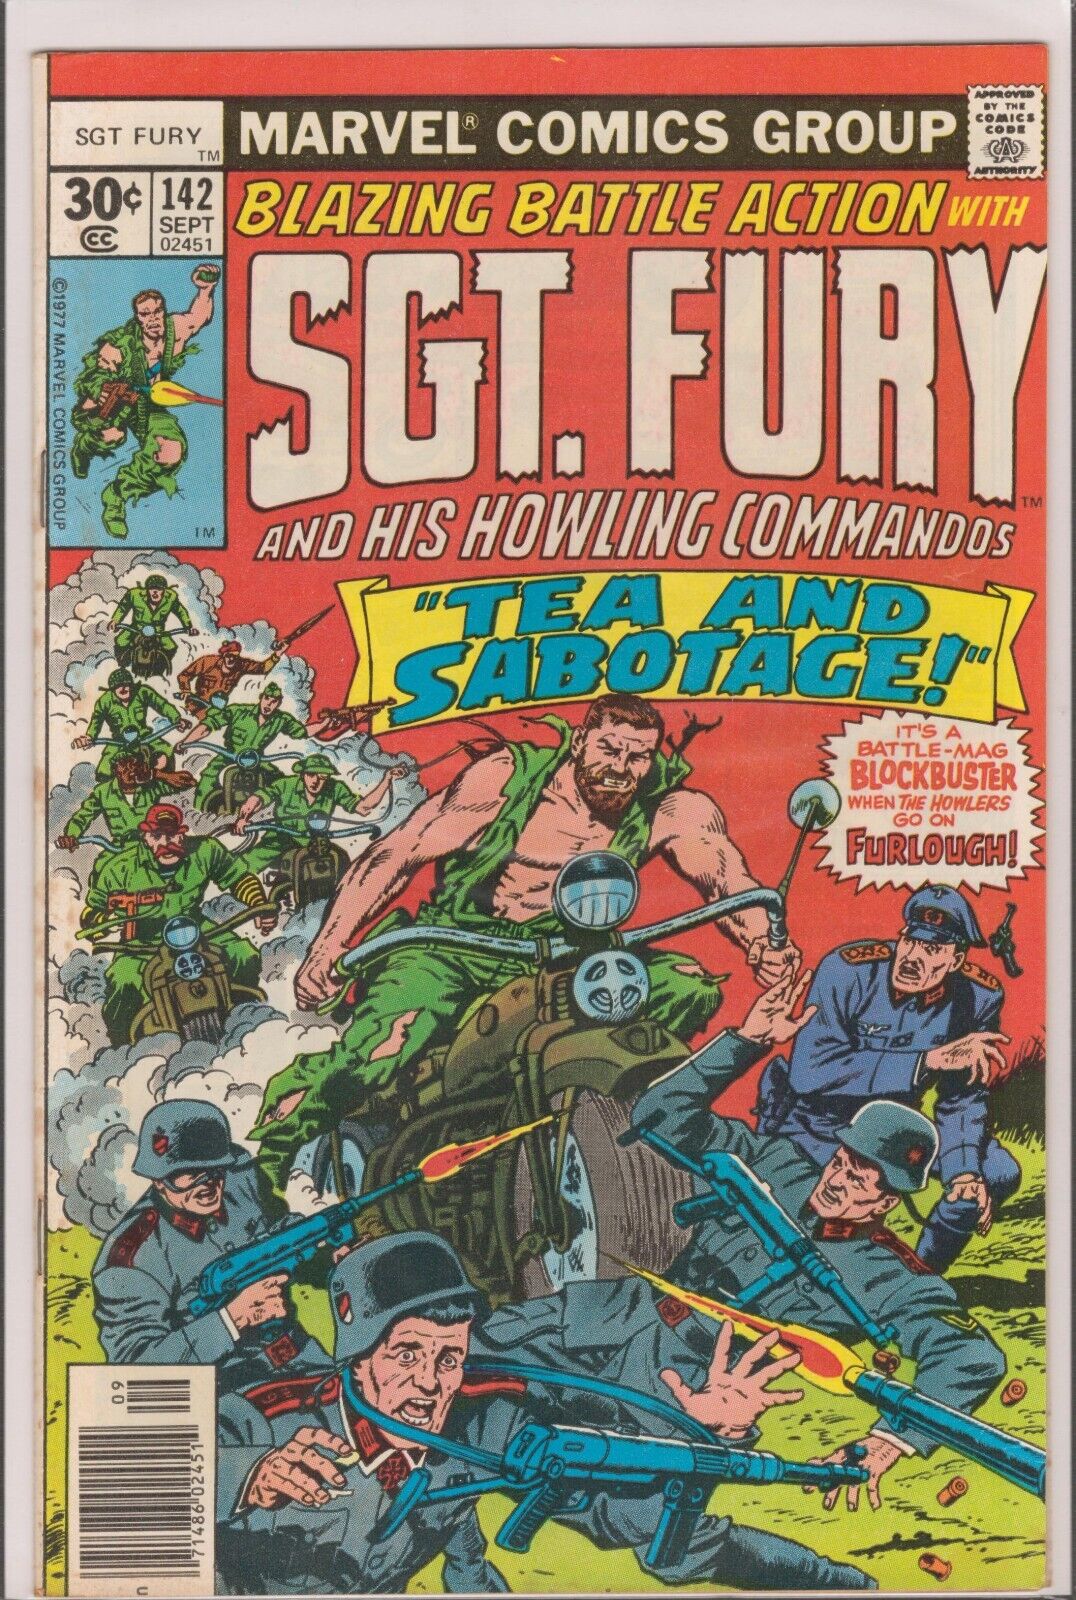 47843: Marvel Comics SGT. FURY AND HIS HOWLING COMMANDOS #142 F Grade